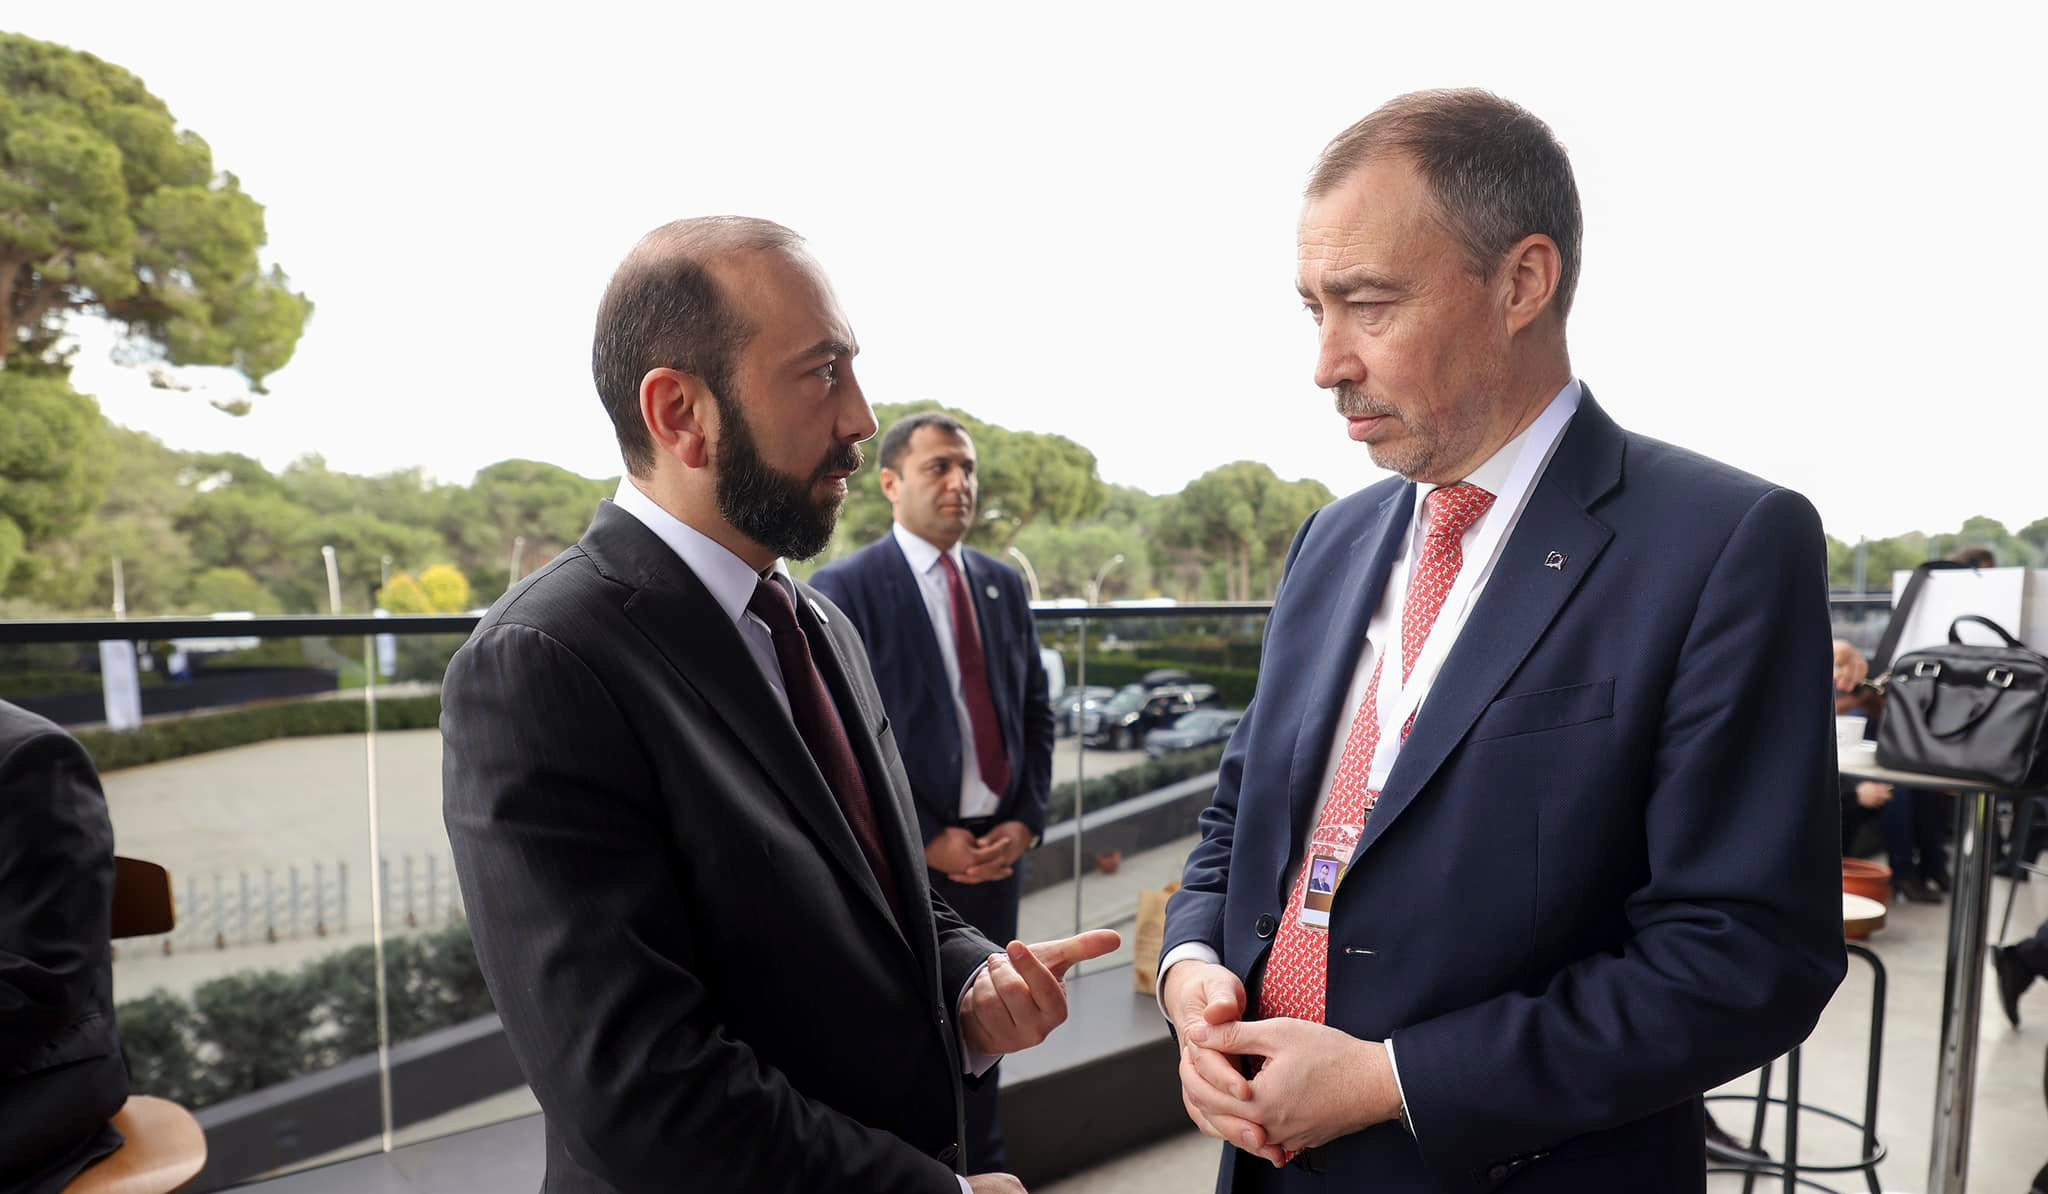 Ararat Mirzoyan and Toivo Klaar discussed latest regional developments